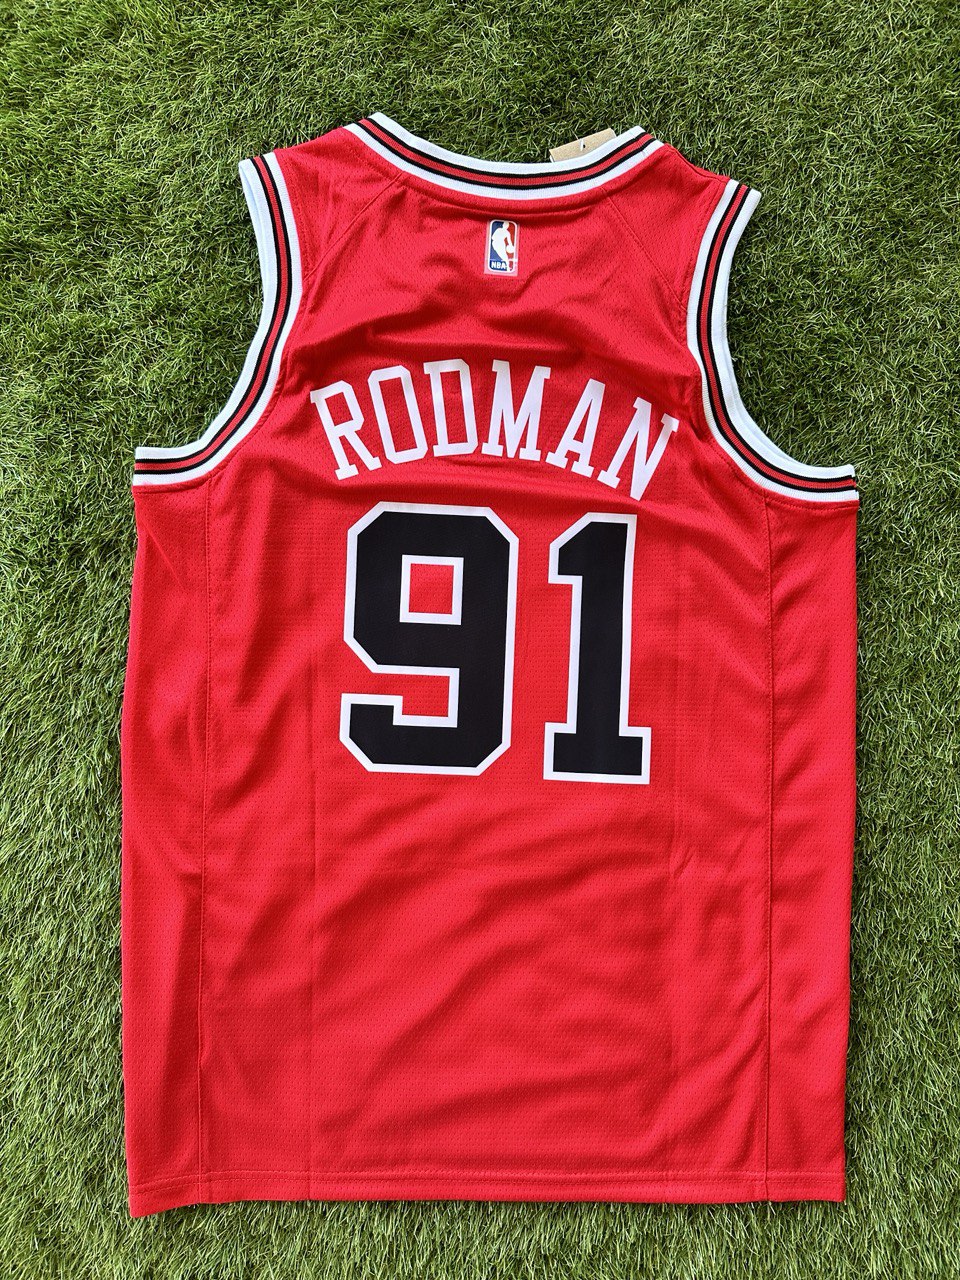 Swingman NBA player Dennis Rodman #91 Chicago Bulls